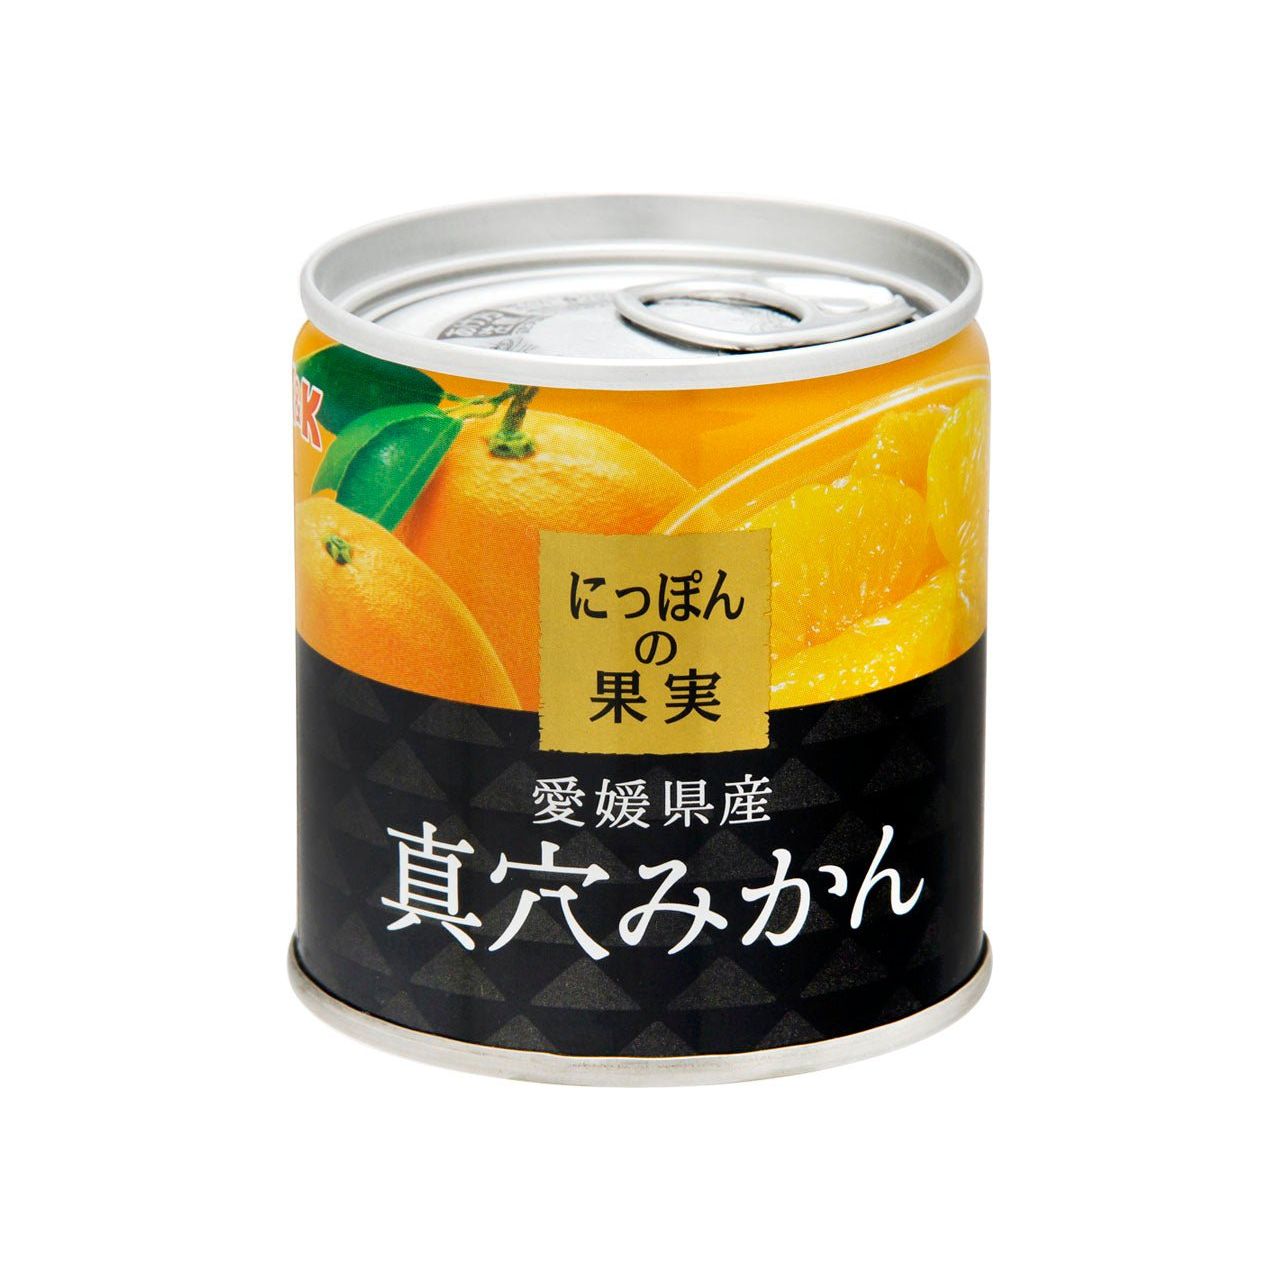 K & K Nippon Fruit Fruit Mandarin